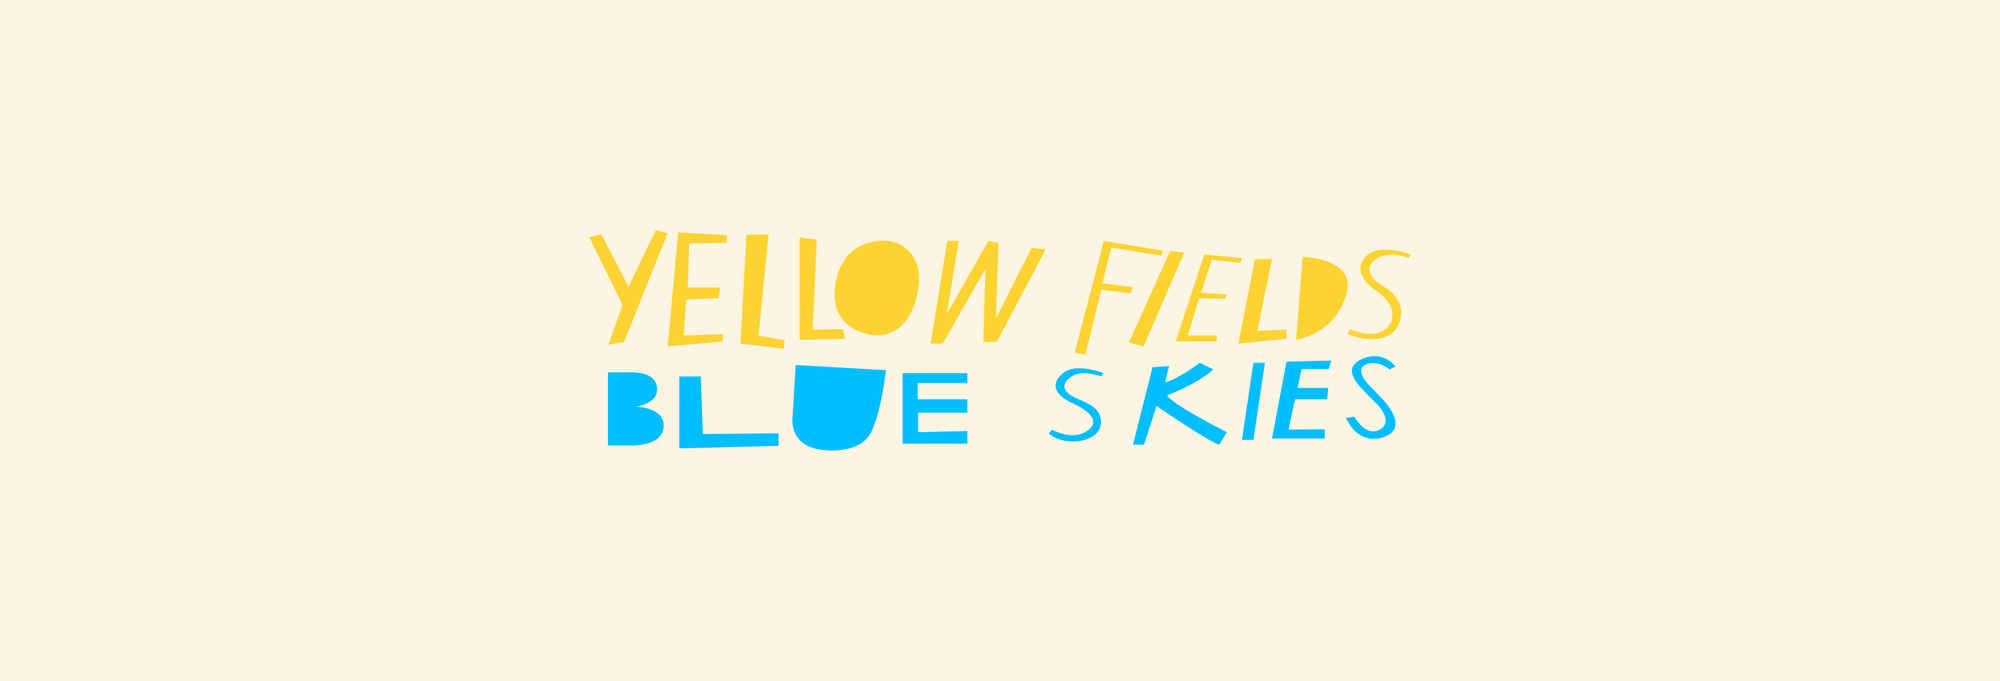 Yellow Fields Blue Skies